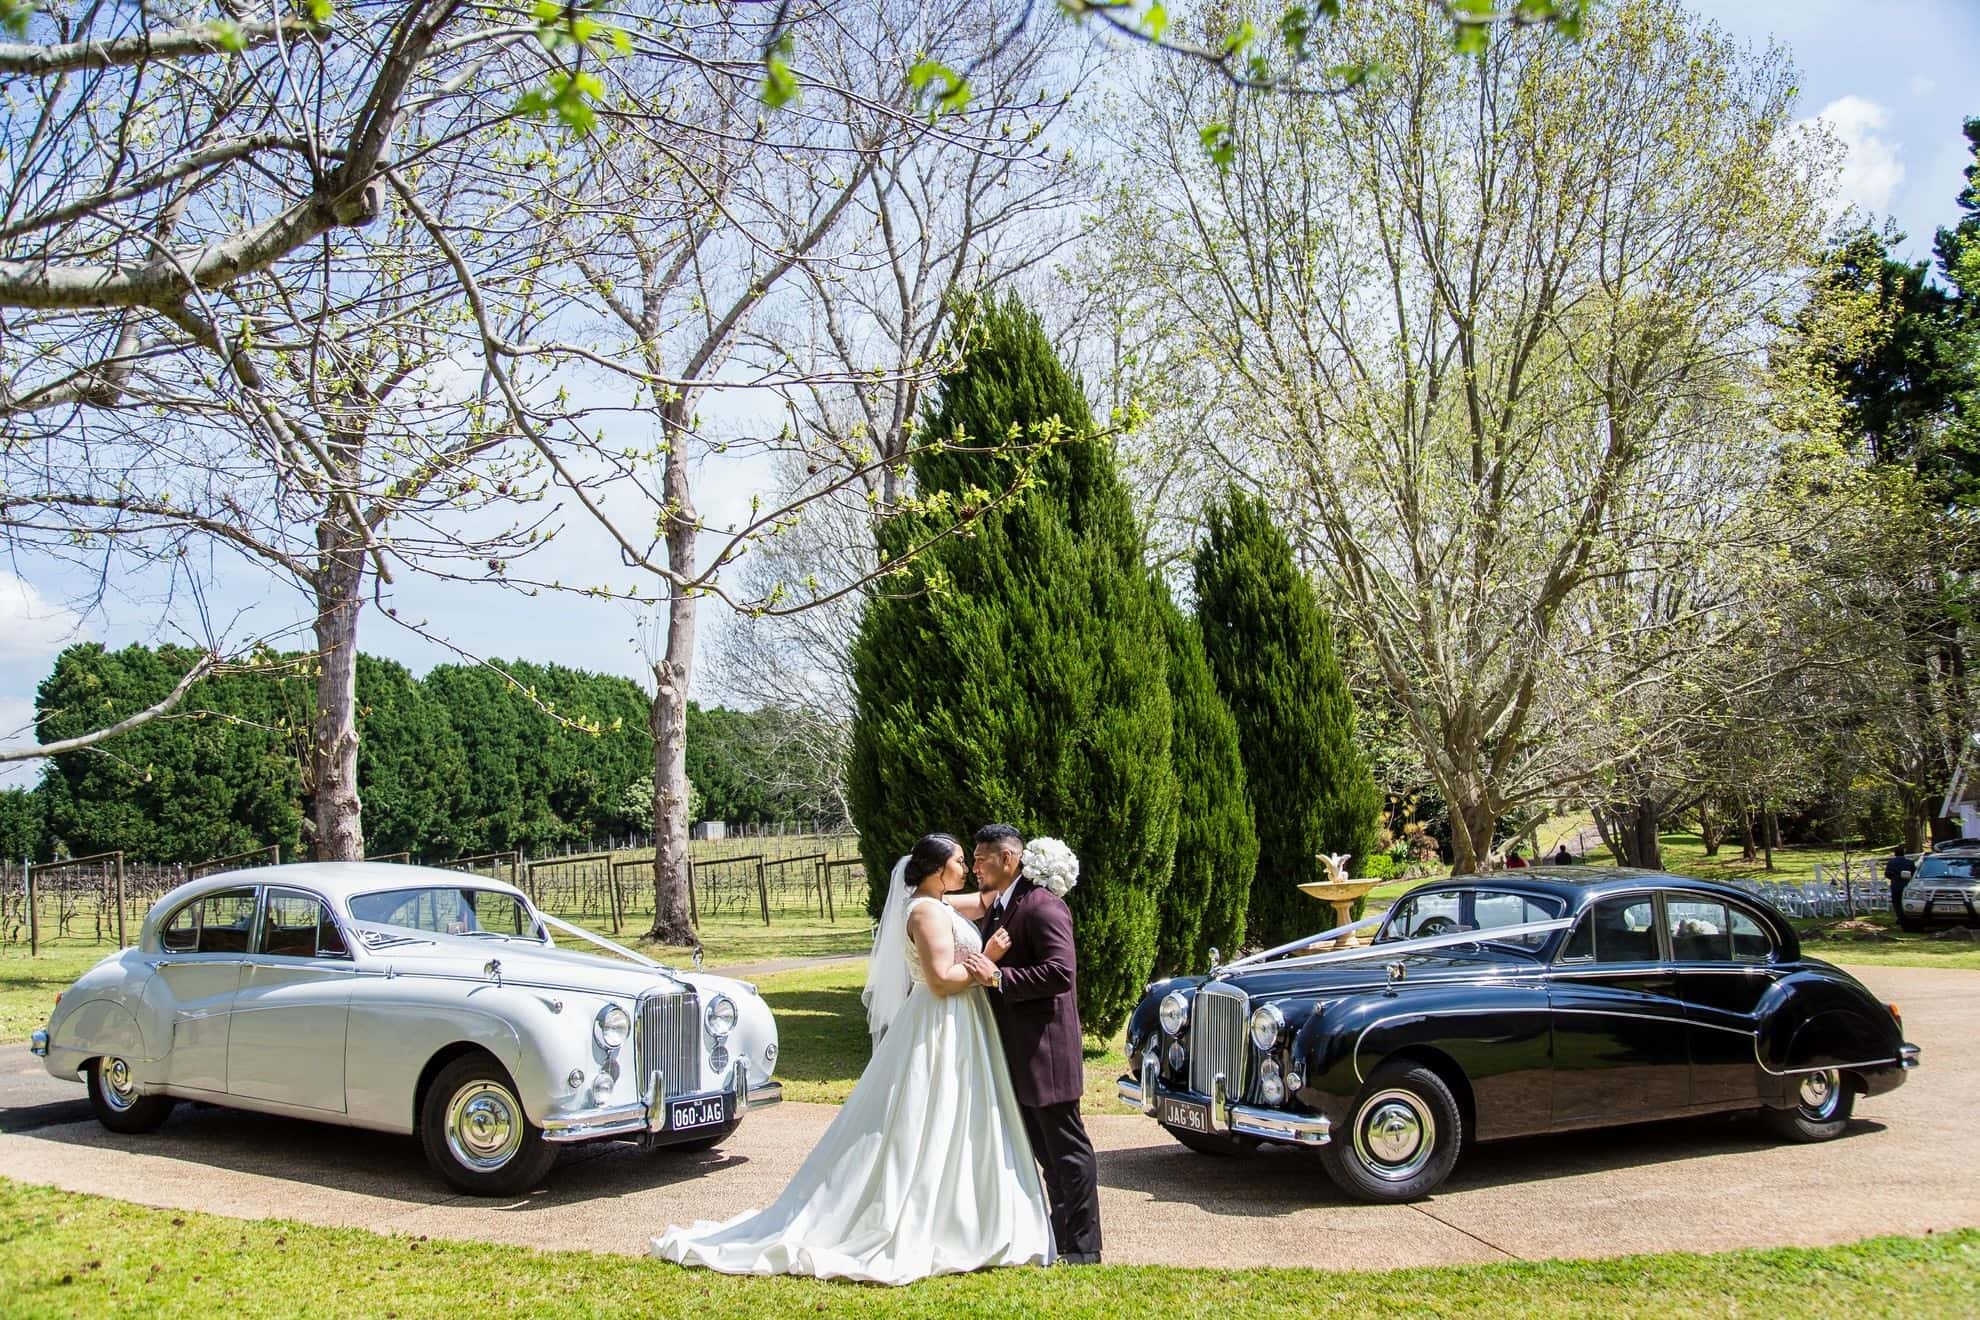 Tamborine mountain wedding transport at Cedar Creek Estate, by Our Wedding Cars